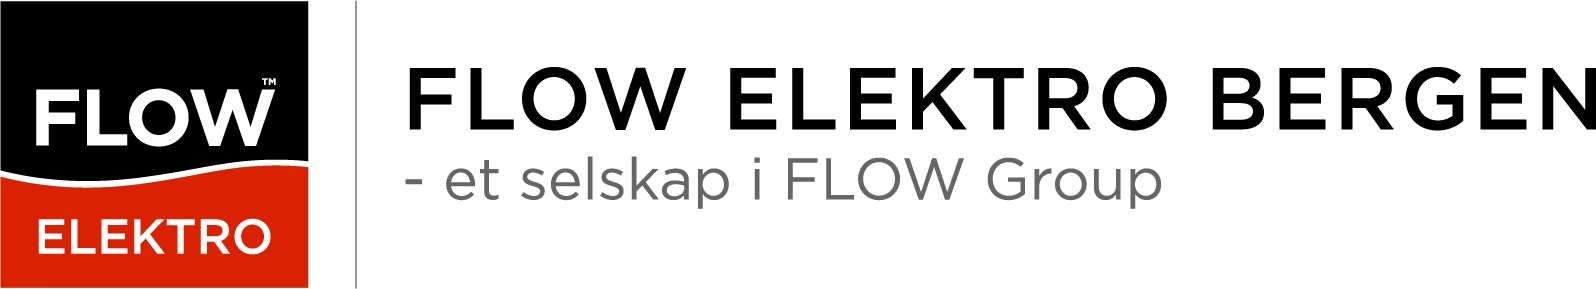 FLOW Elektro Bergen